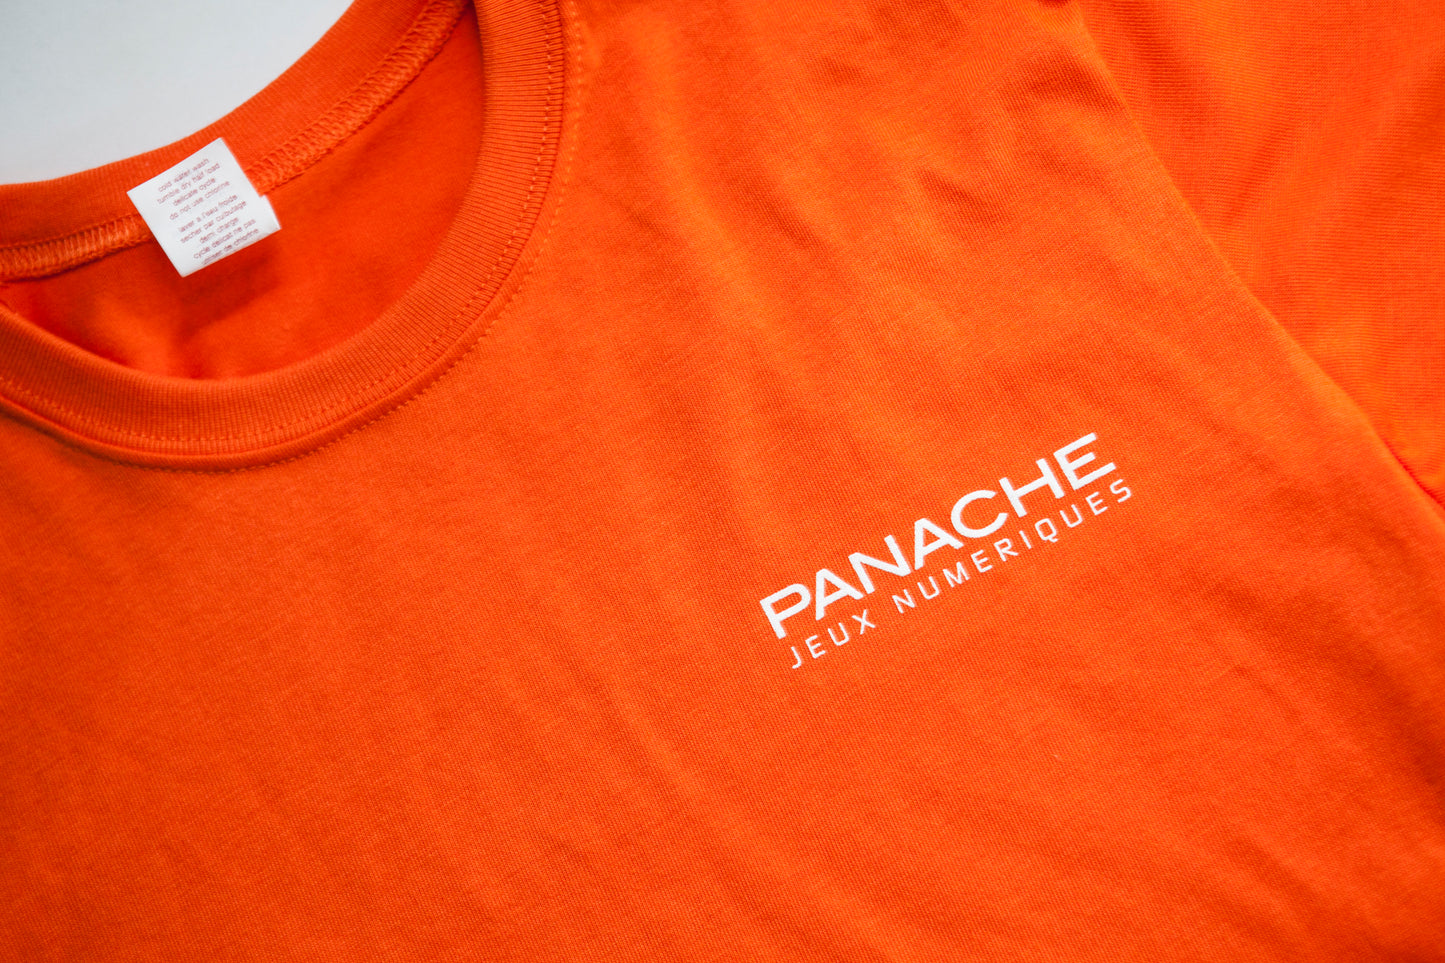 Orange Original - T-shirt - Original Panache